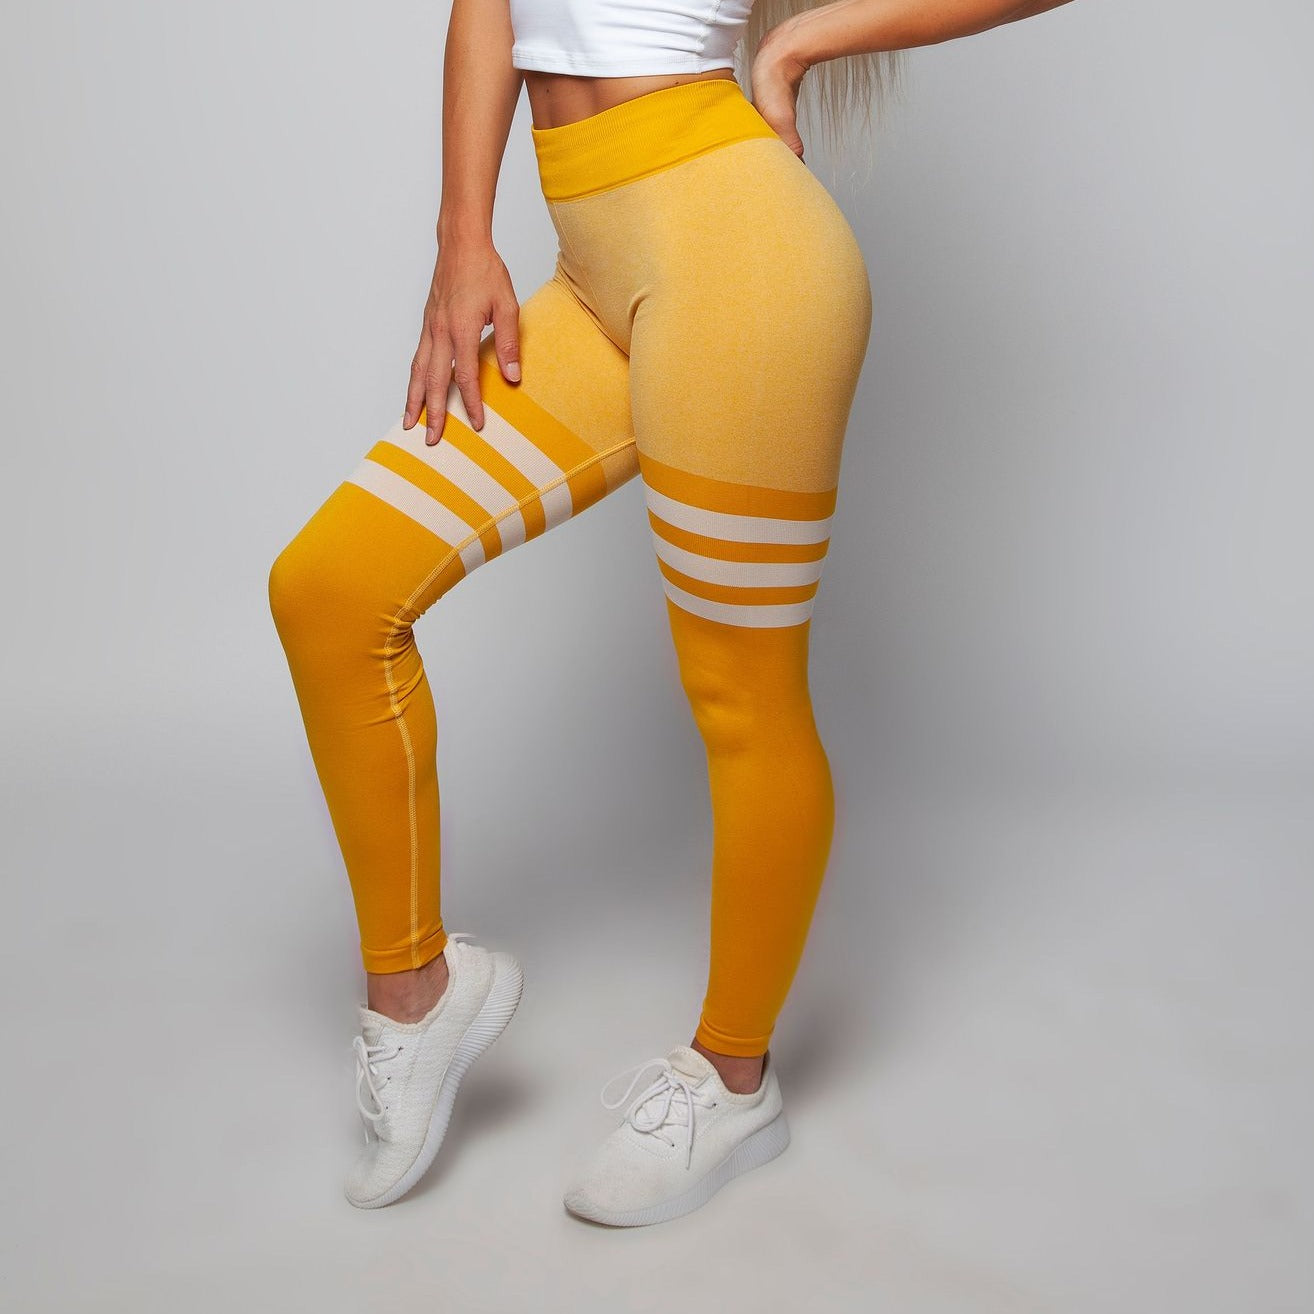 Yellow thigh high sock leggings